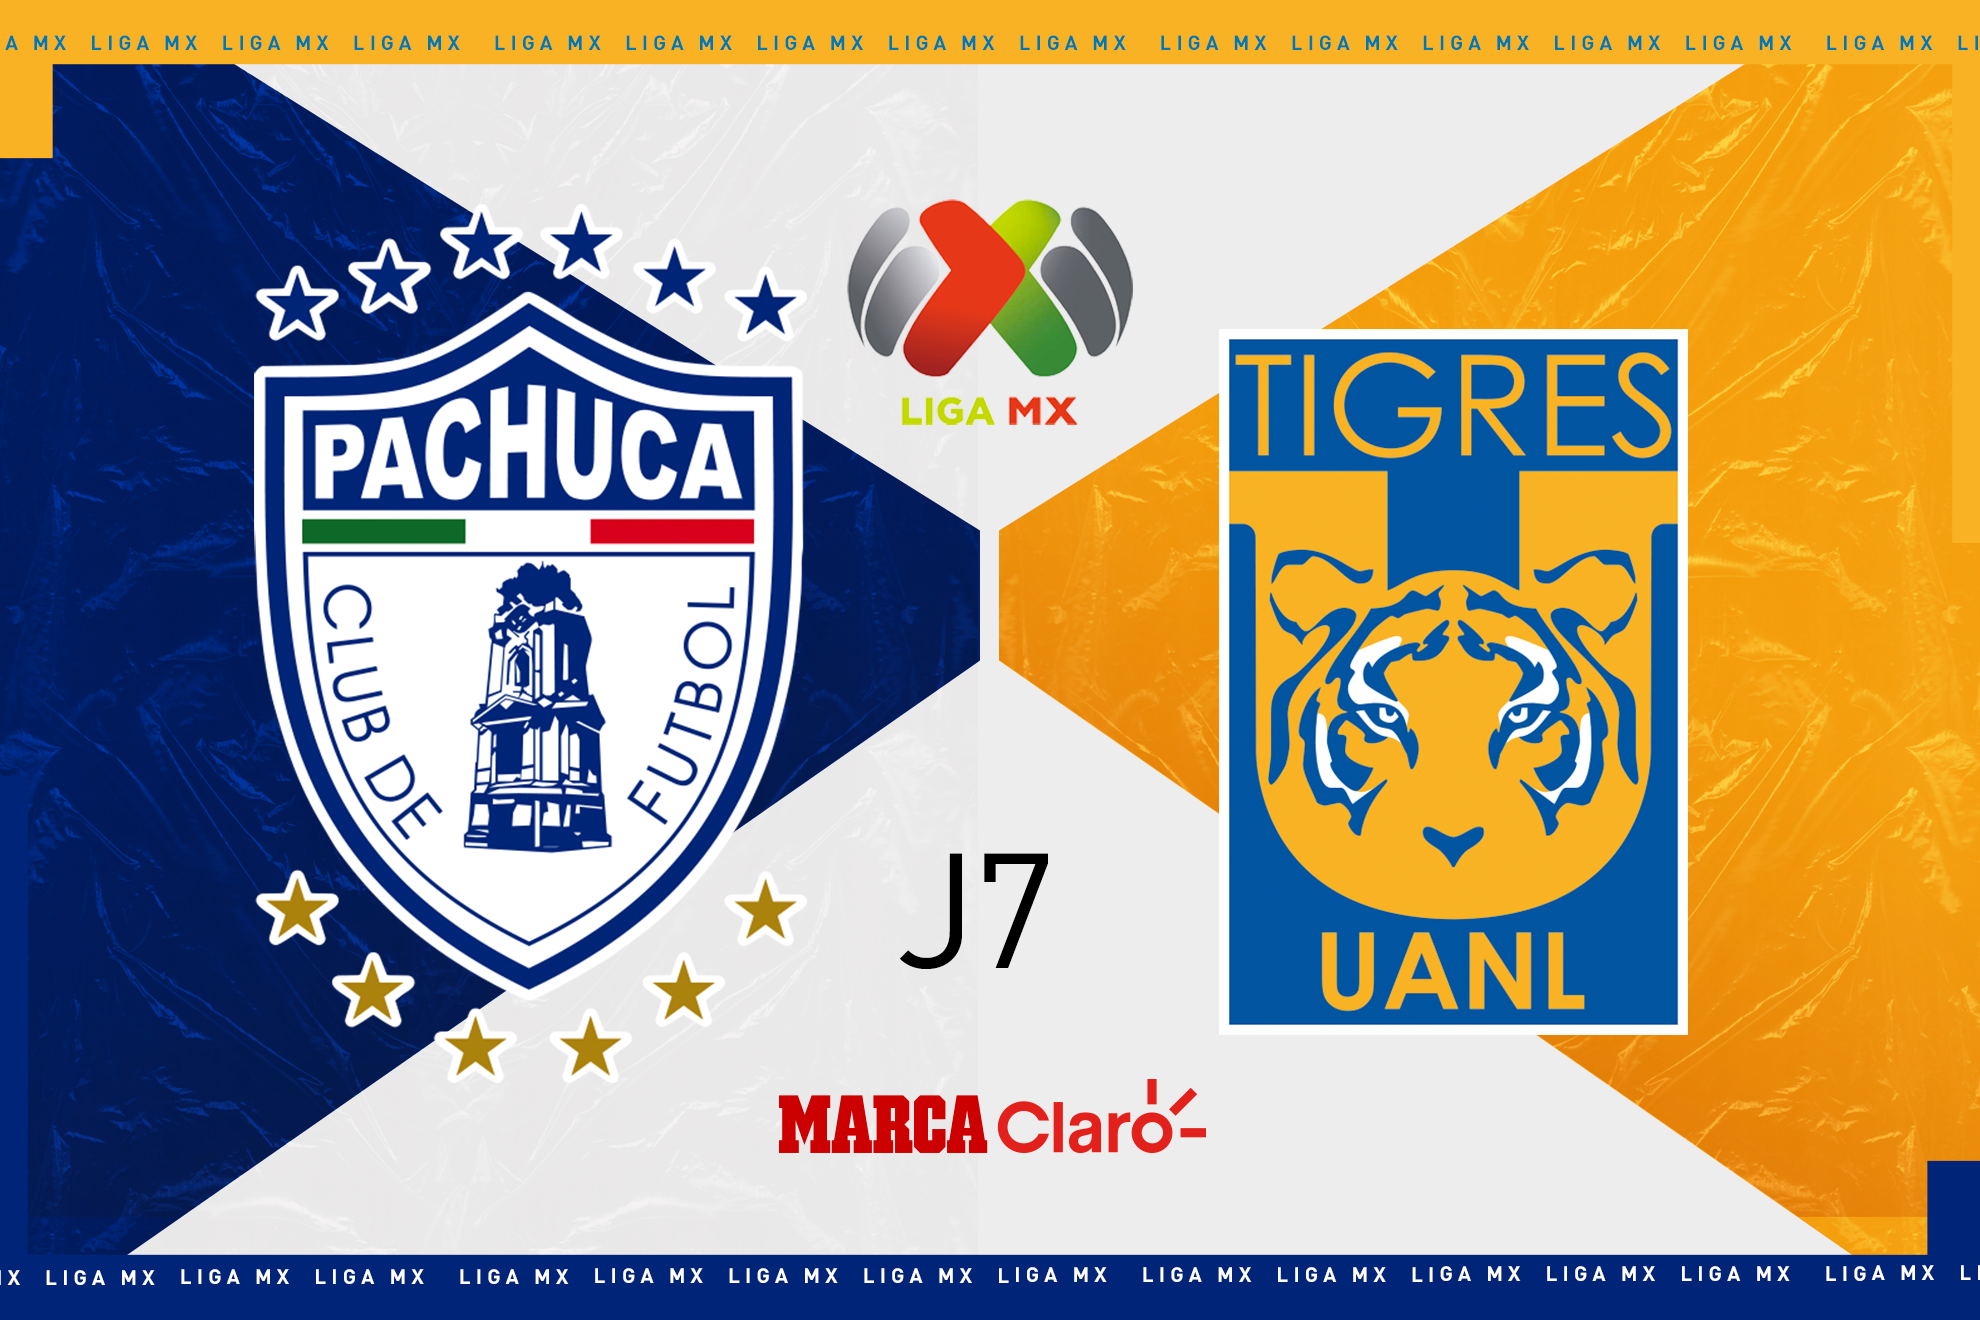 Pachuca vs Tigres, en vivo por internet